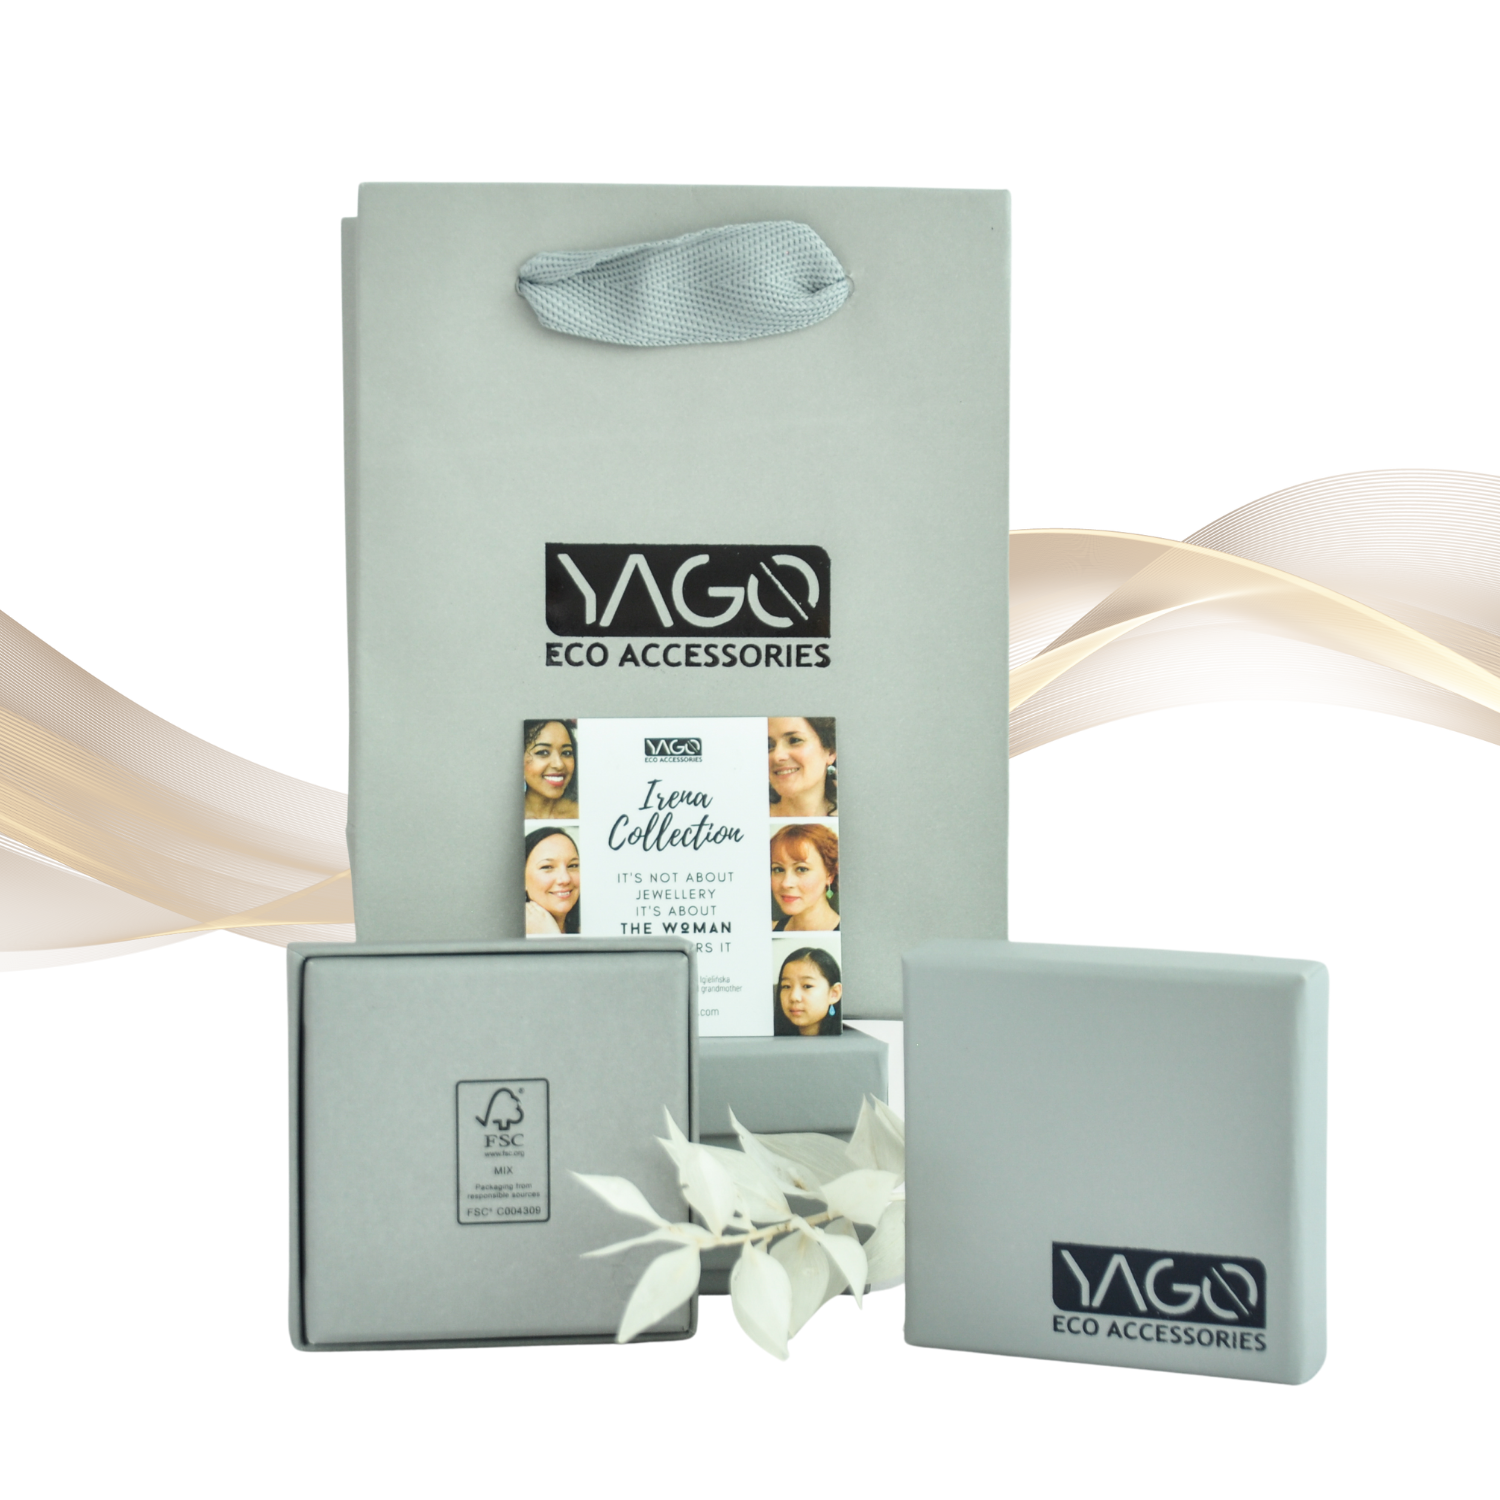 YagoEco accessories Sustainable jewellery Brand London